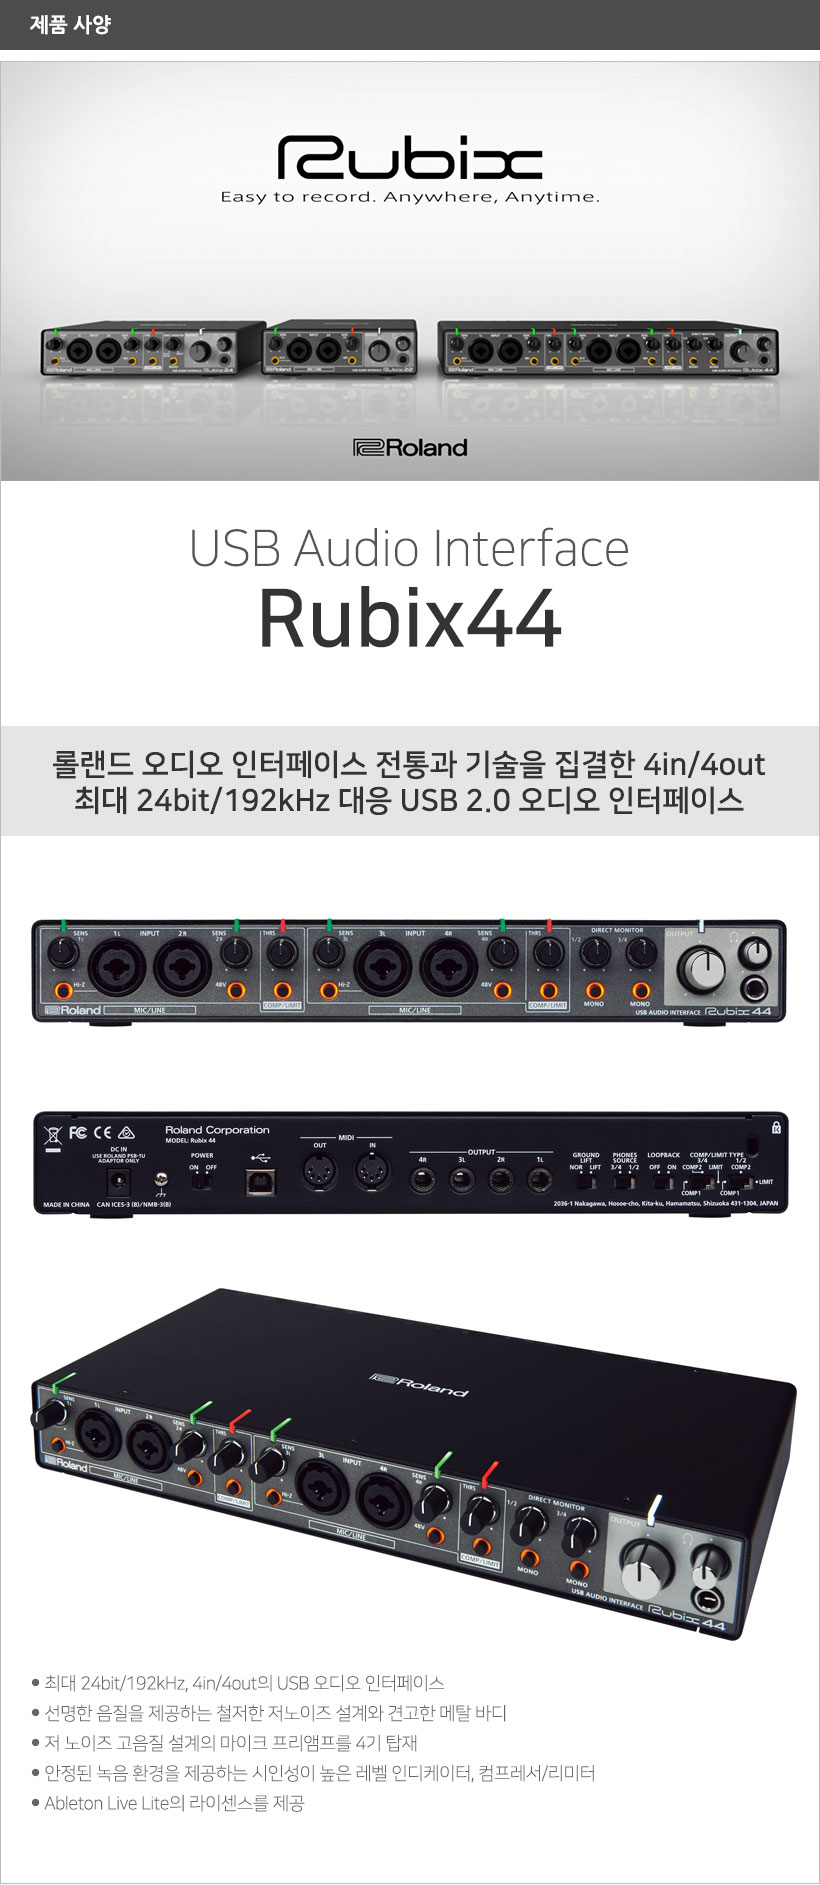 Rubix44 제품사양